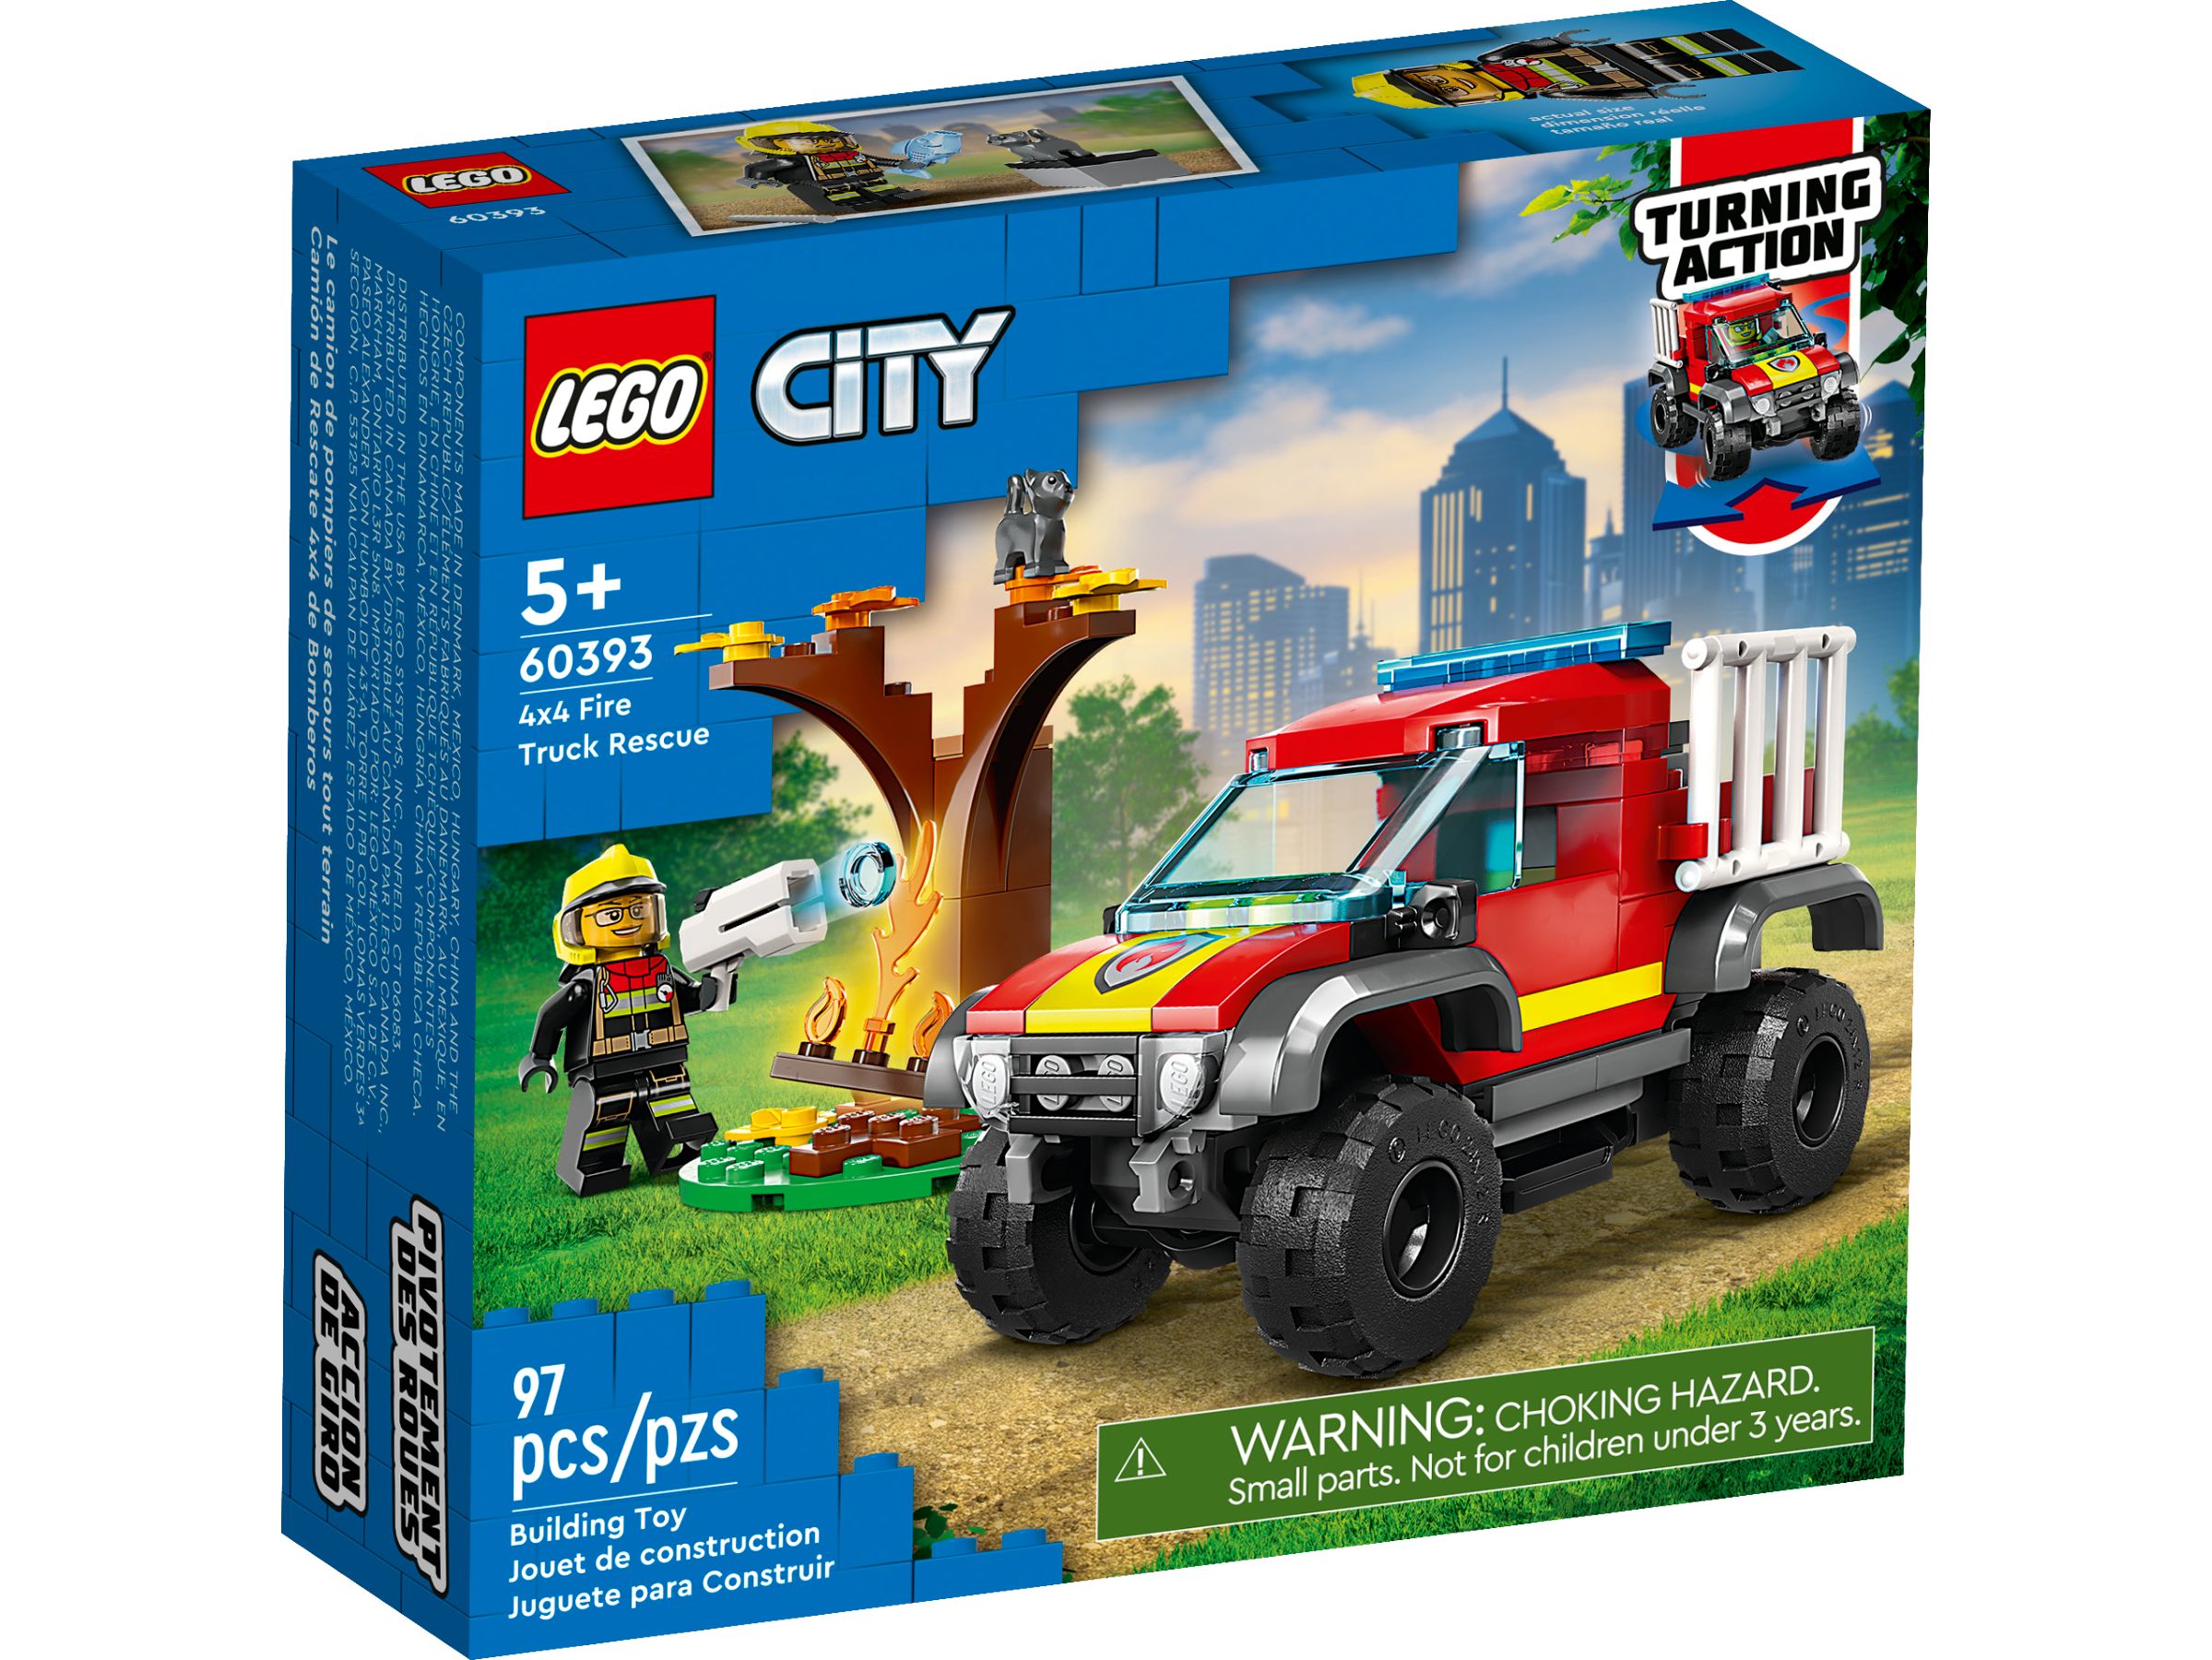 LEGO City 60393 Feuerwehr-Pickup LEGO_60393_alt1.jpg